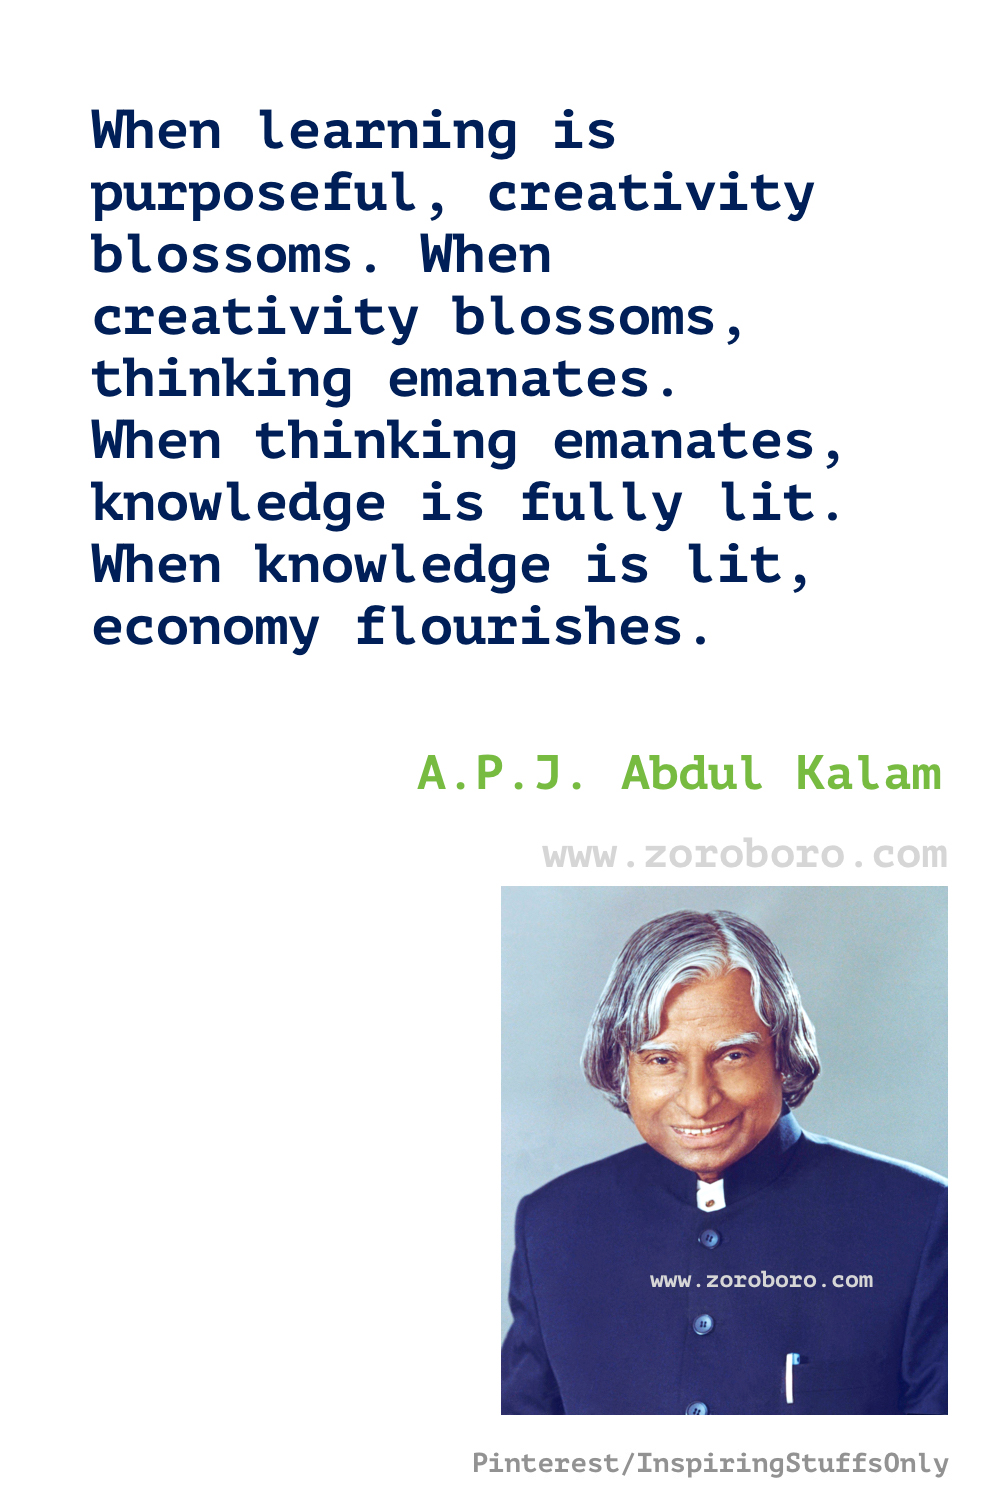 A.P.J. Abdul Kalam Quotes. A.P.J. Abdul Kalam DREAM Quotes, A.P.J. Abdul Kalam LIFE Quotes, LOVE Quotes, A.P.J. Abdul Kalam SCIENCE Quotes, A.P.J. Abdul Kalam EDUCATION Quotes & A.P.J. Abdul Kalam STUDENTS Quotes. A.P.J. Abdul Kalam Quotes in English, A.P.J. Abdul Kalam Inspirational & Motivational Quotes,backbencher quotes